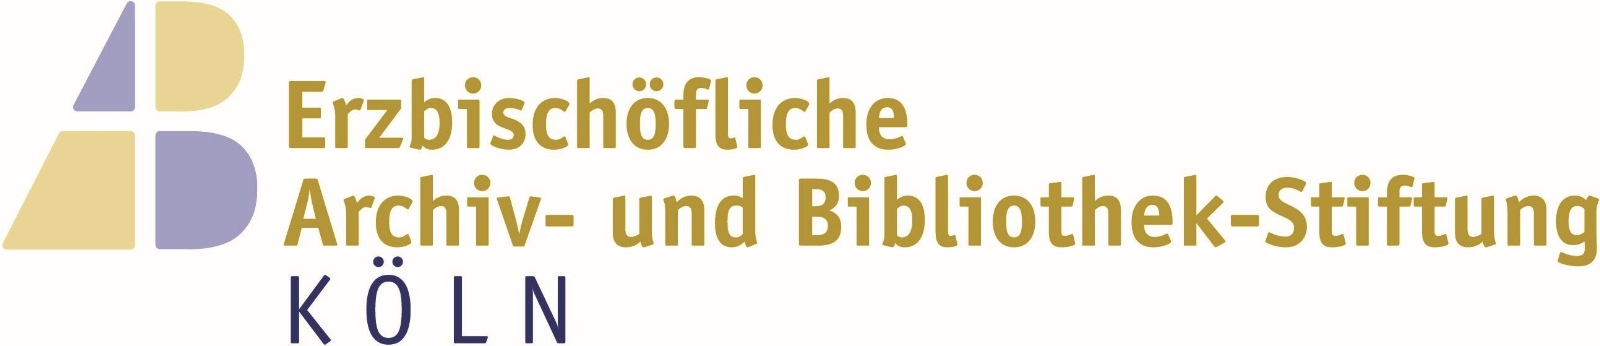 01_logo_final_archiv-u_biliothek_stiftung